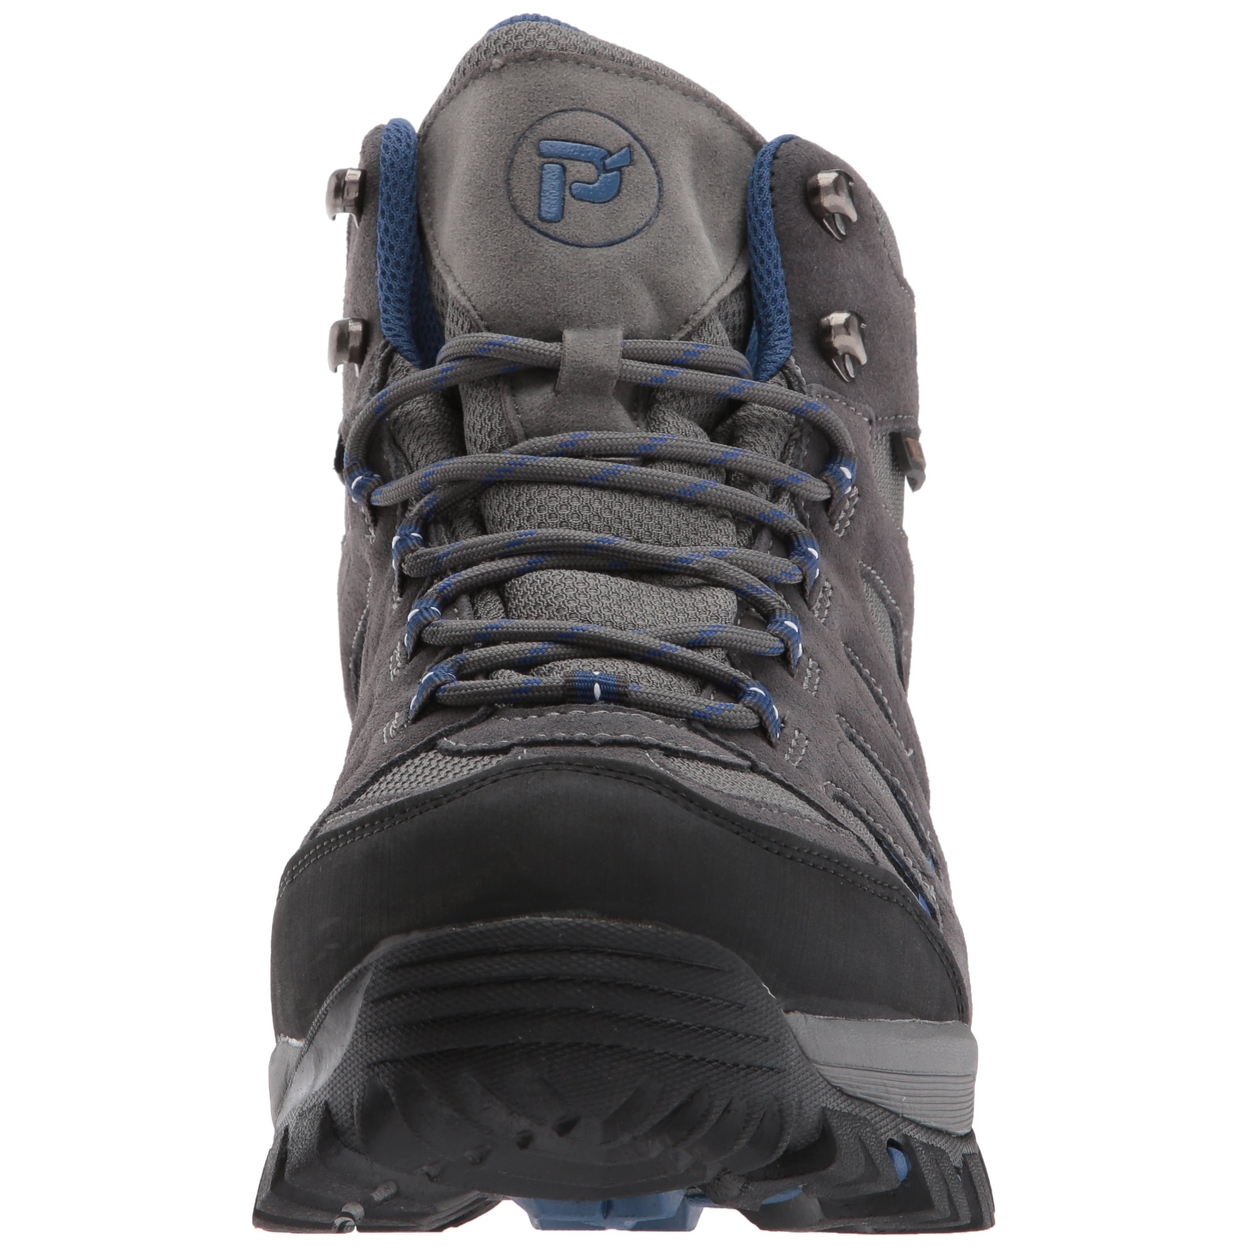 Propet Men's Ridge Walker Hiking Boot Grey/Blue - M3599GRB GREY/BLUE - GREY/BLUE, 8-2E